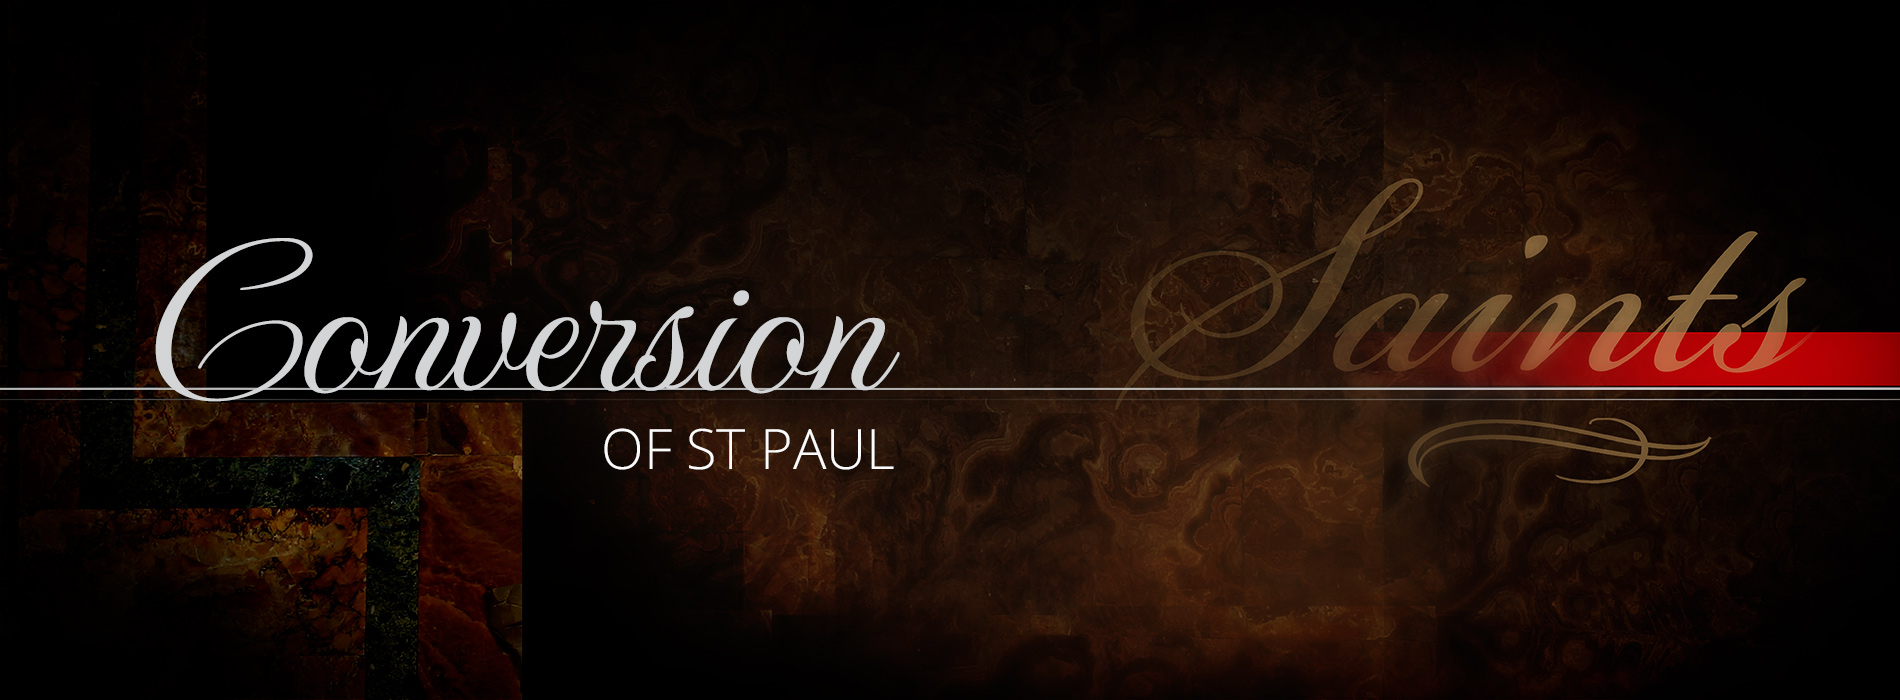 Conversion of St. Paul